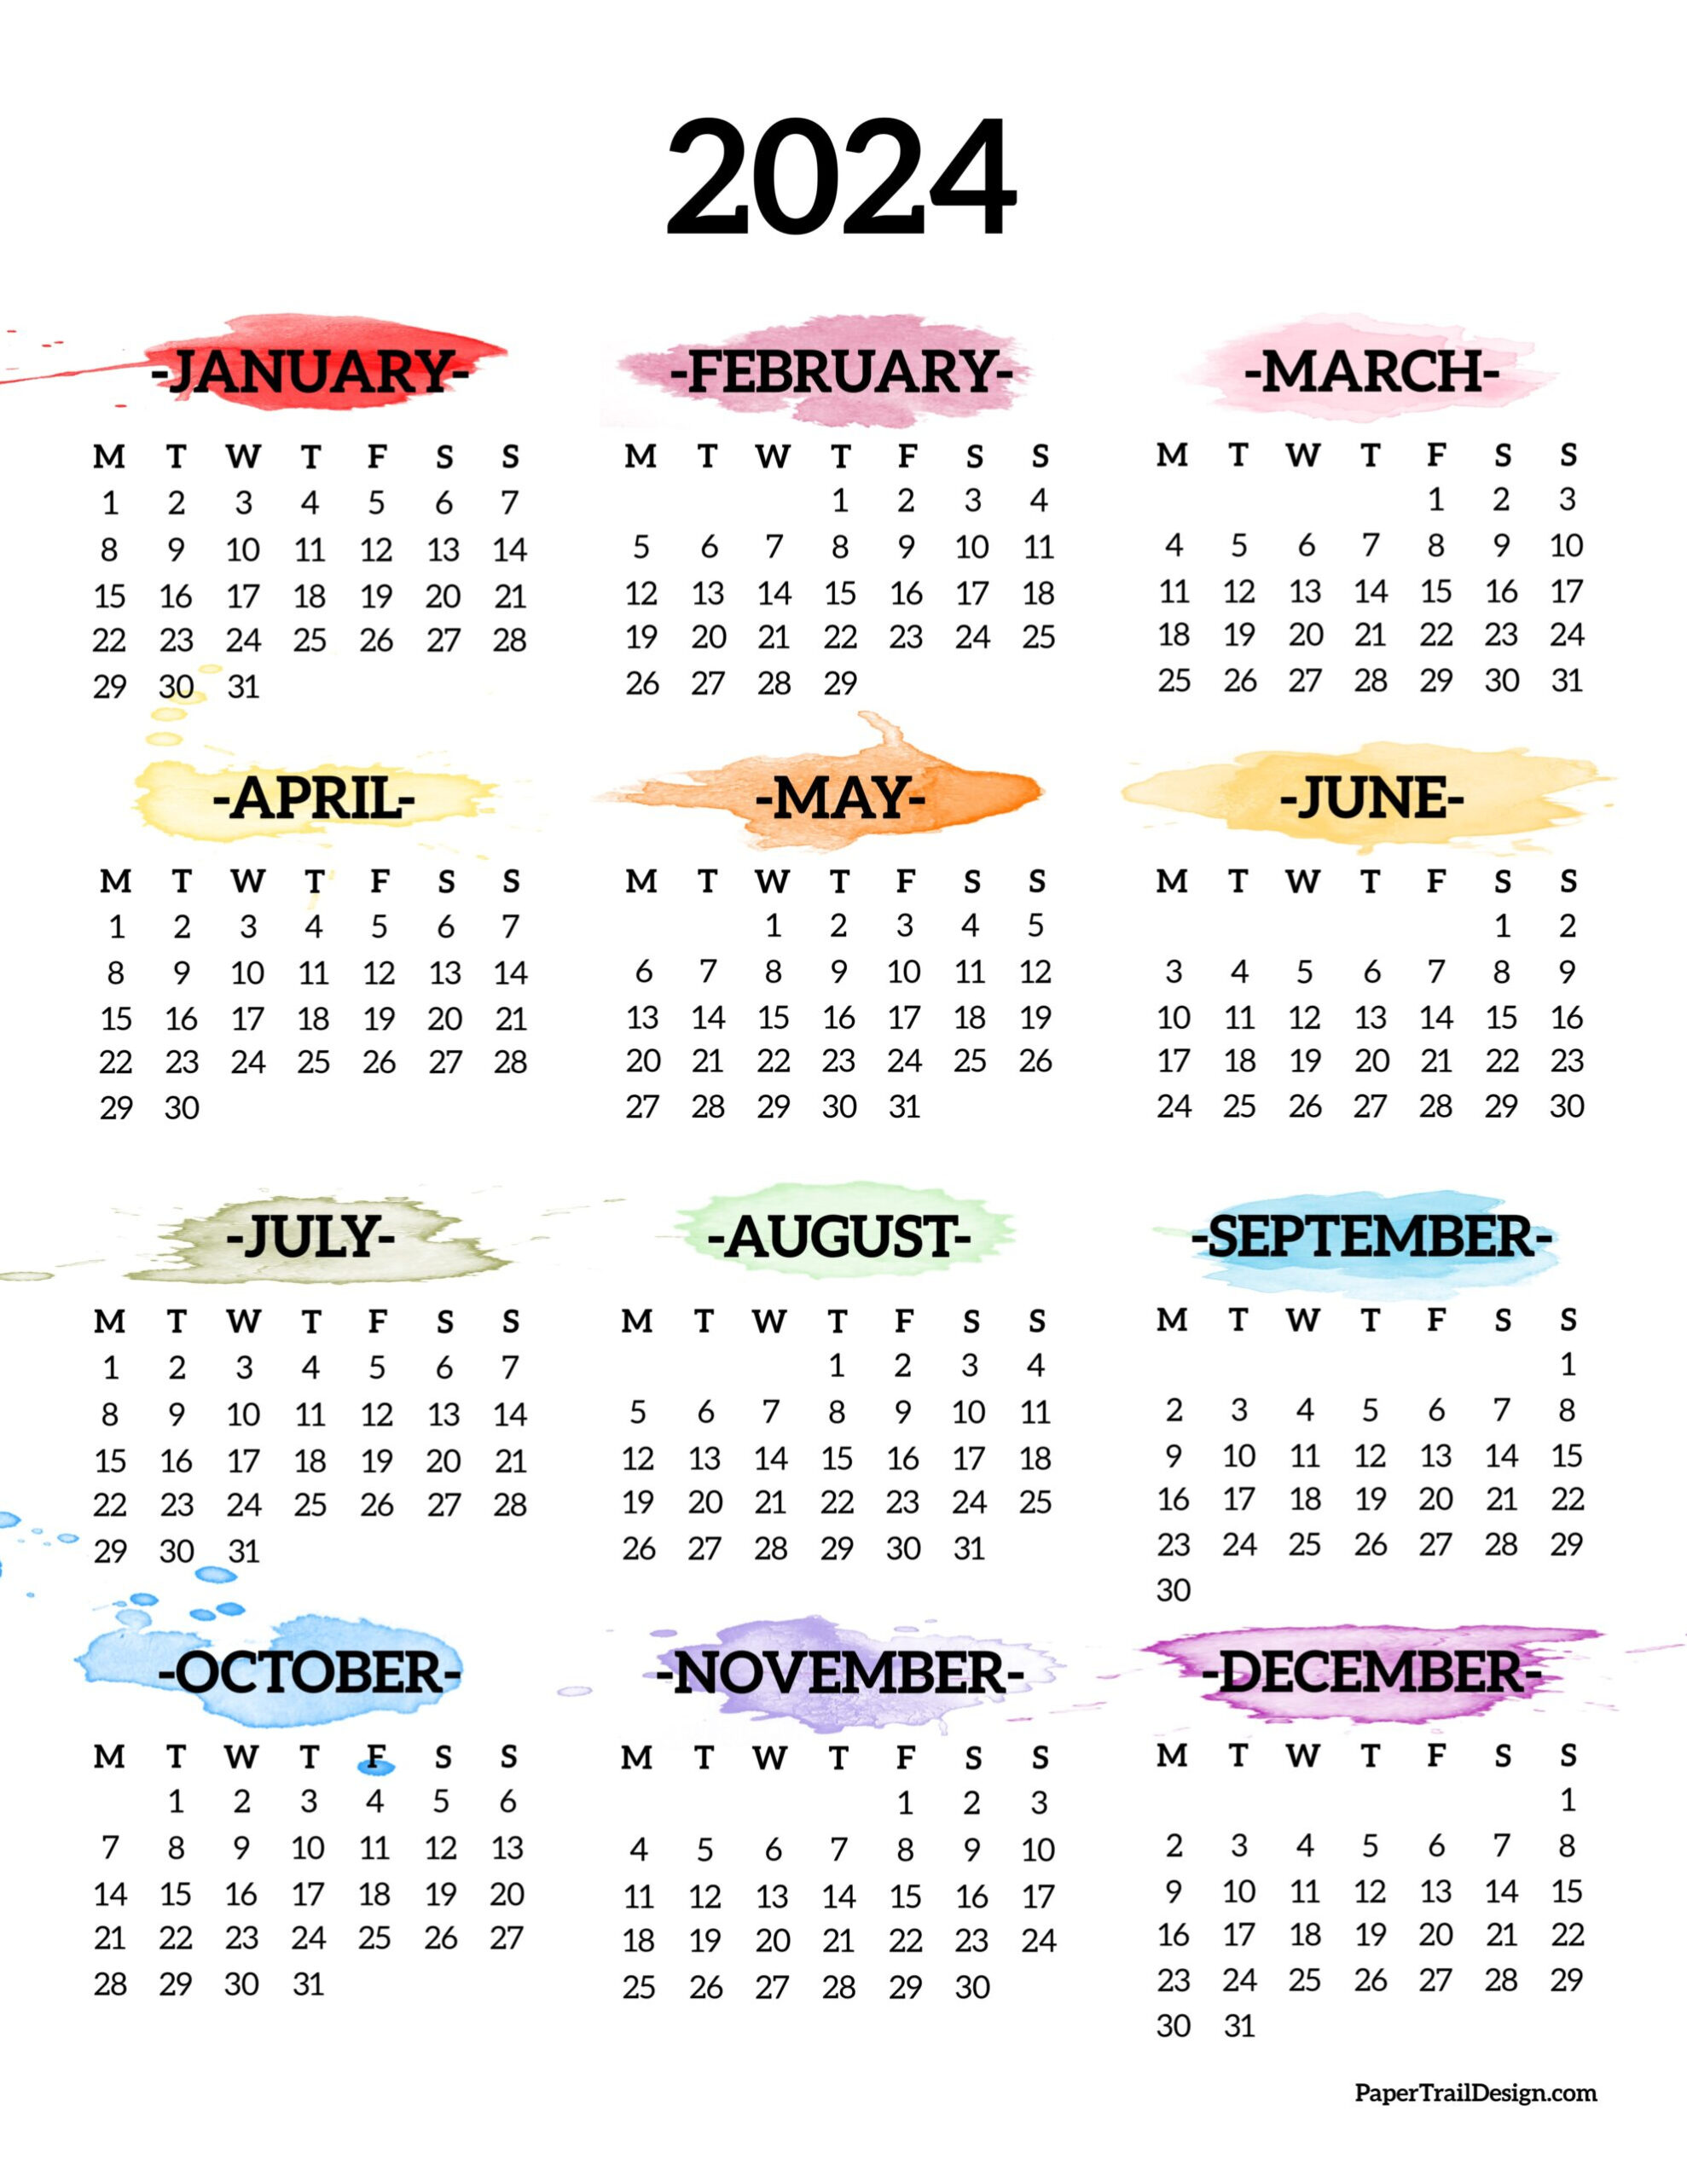 2024 Monday Start Calendar - One Page - Paper Trail Design | 2024 Yearly Calendar Monday Start